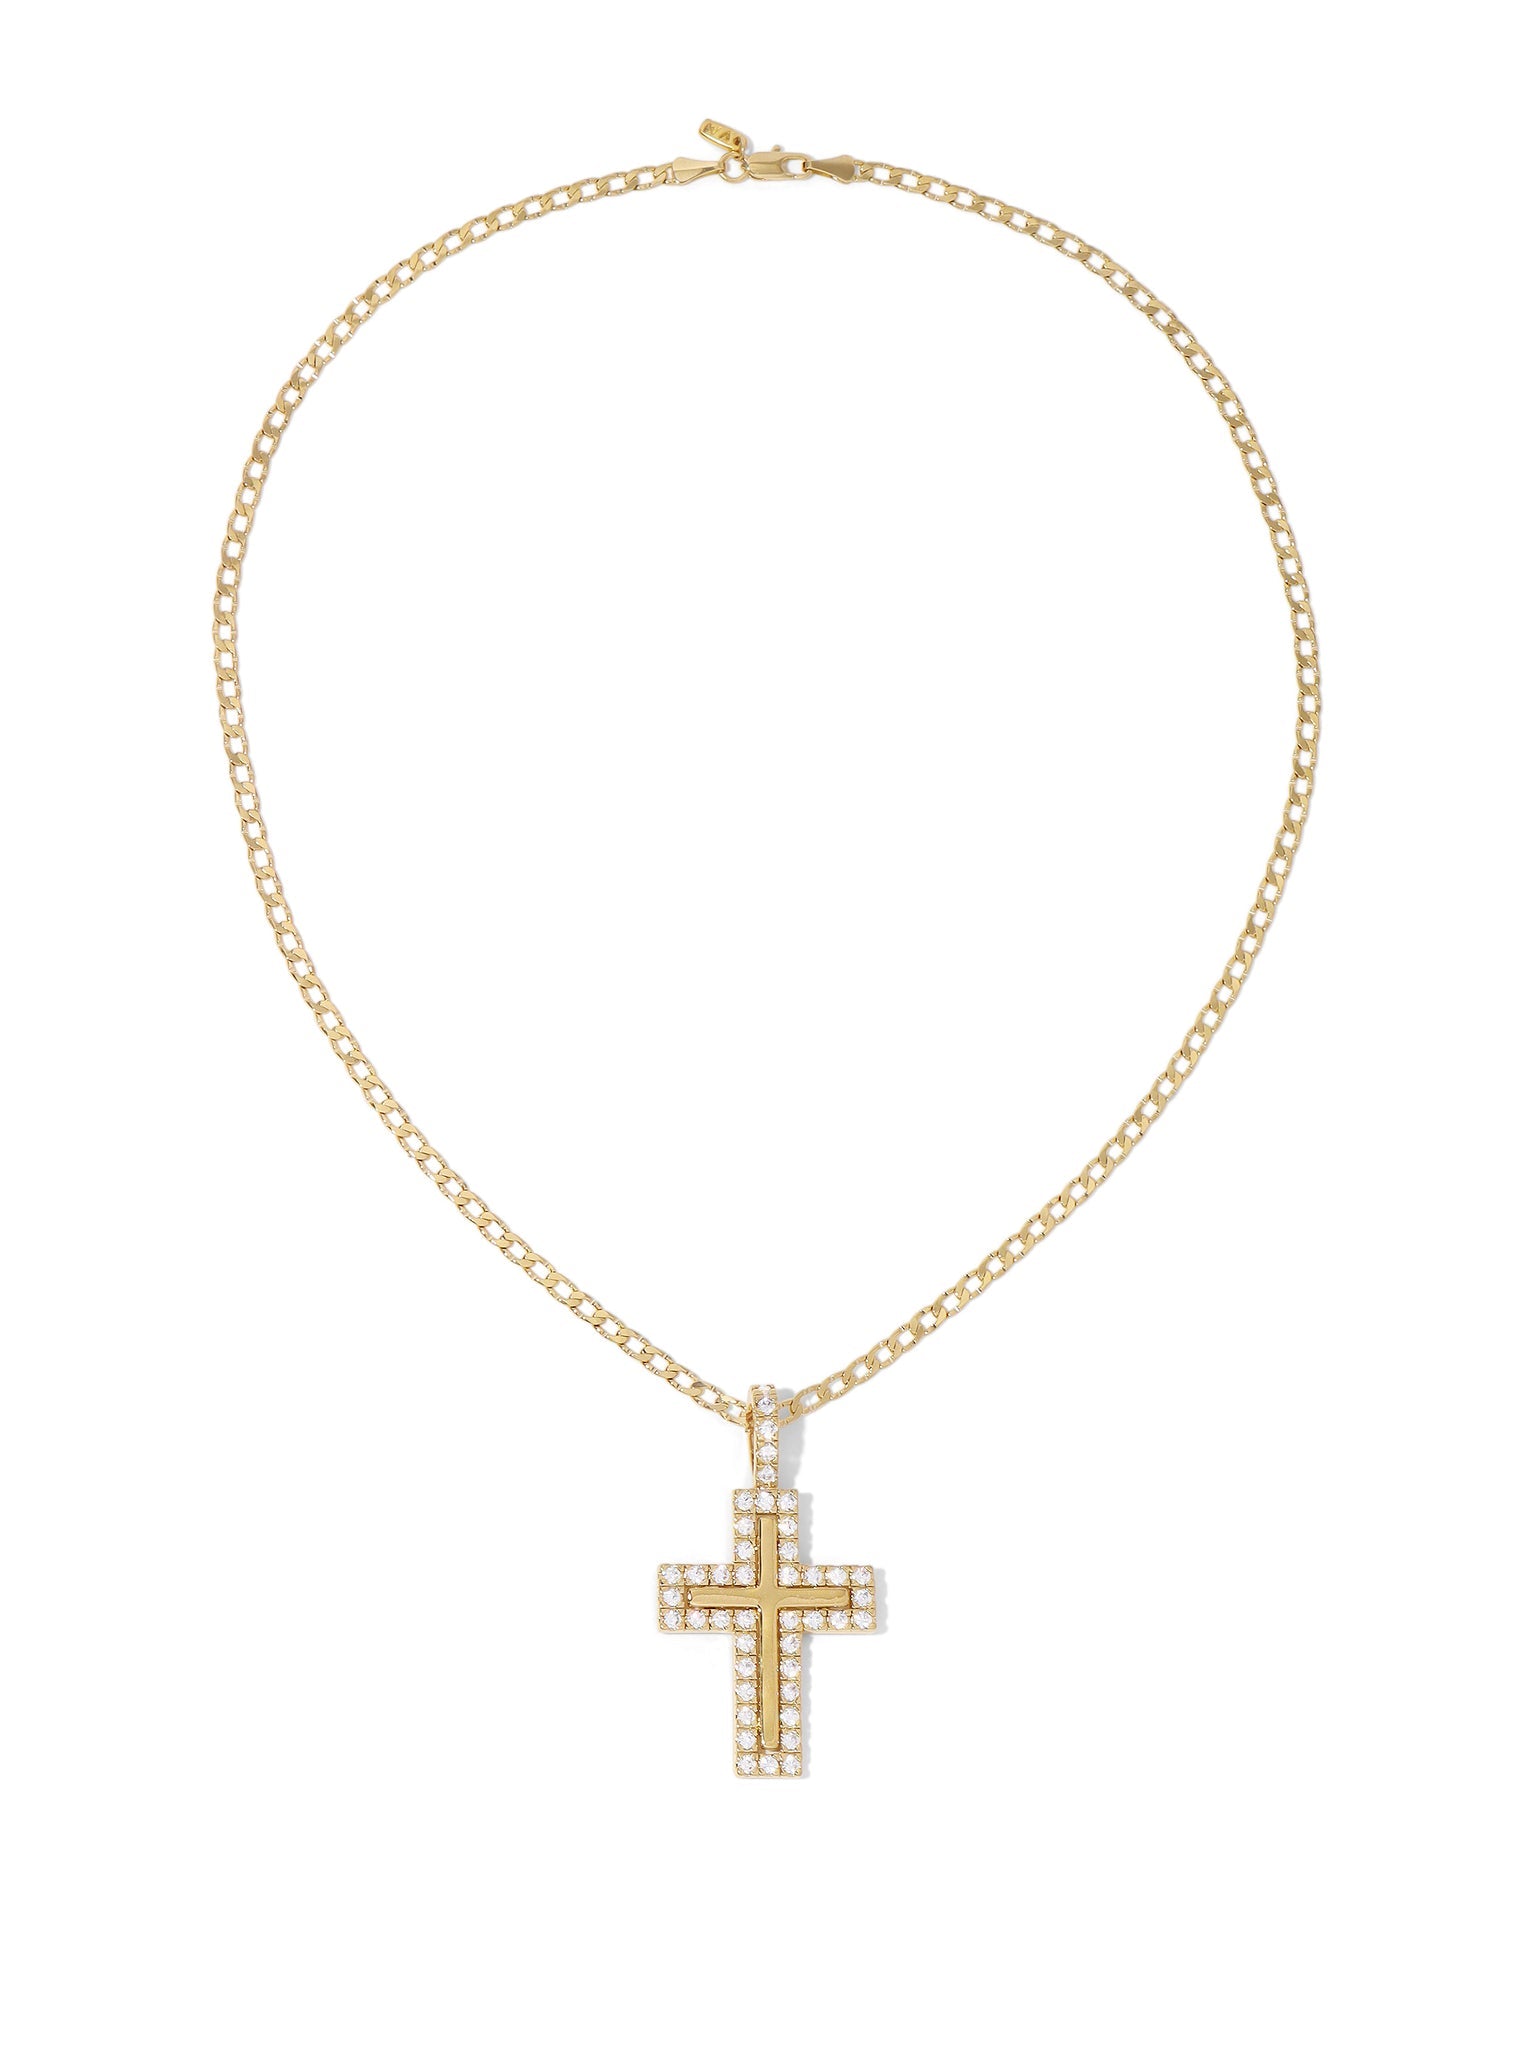 The Domitilla Cross Necklace